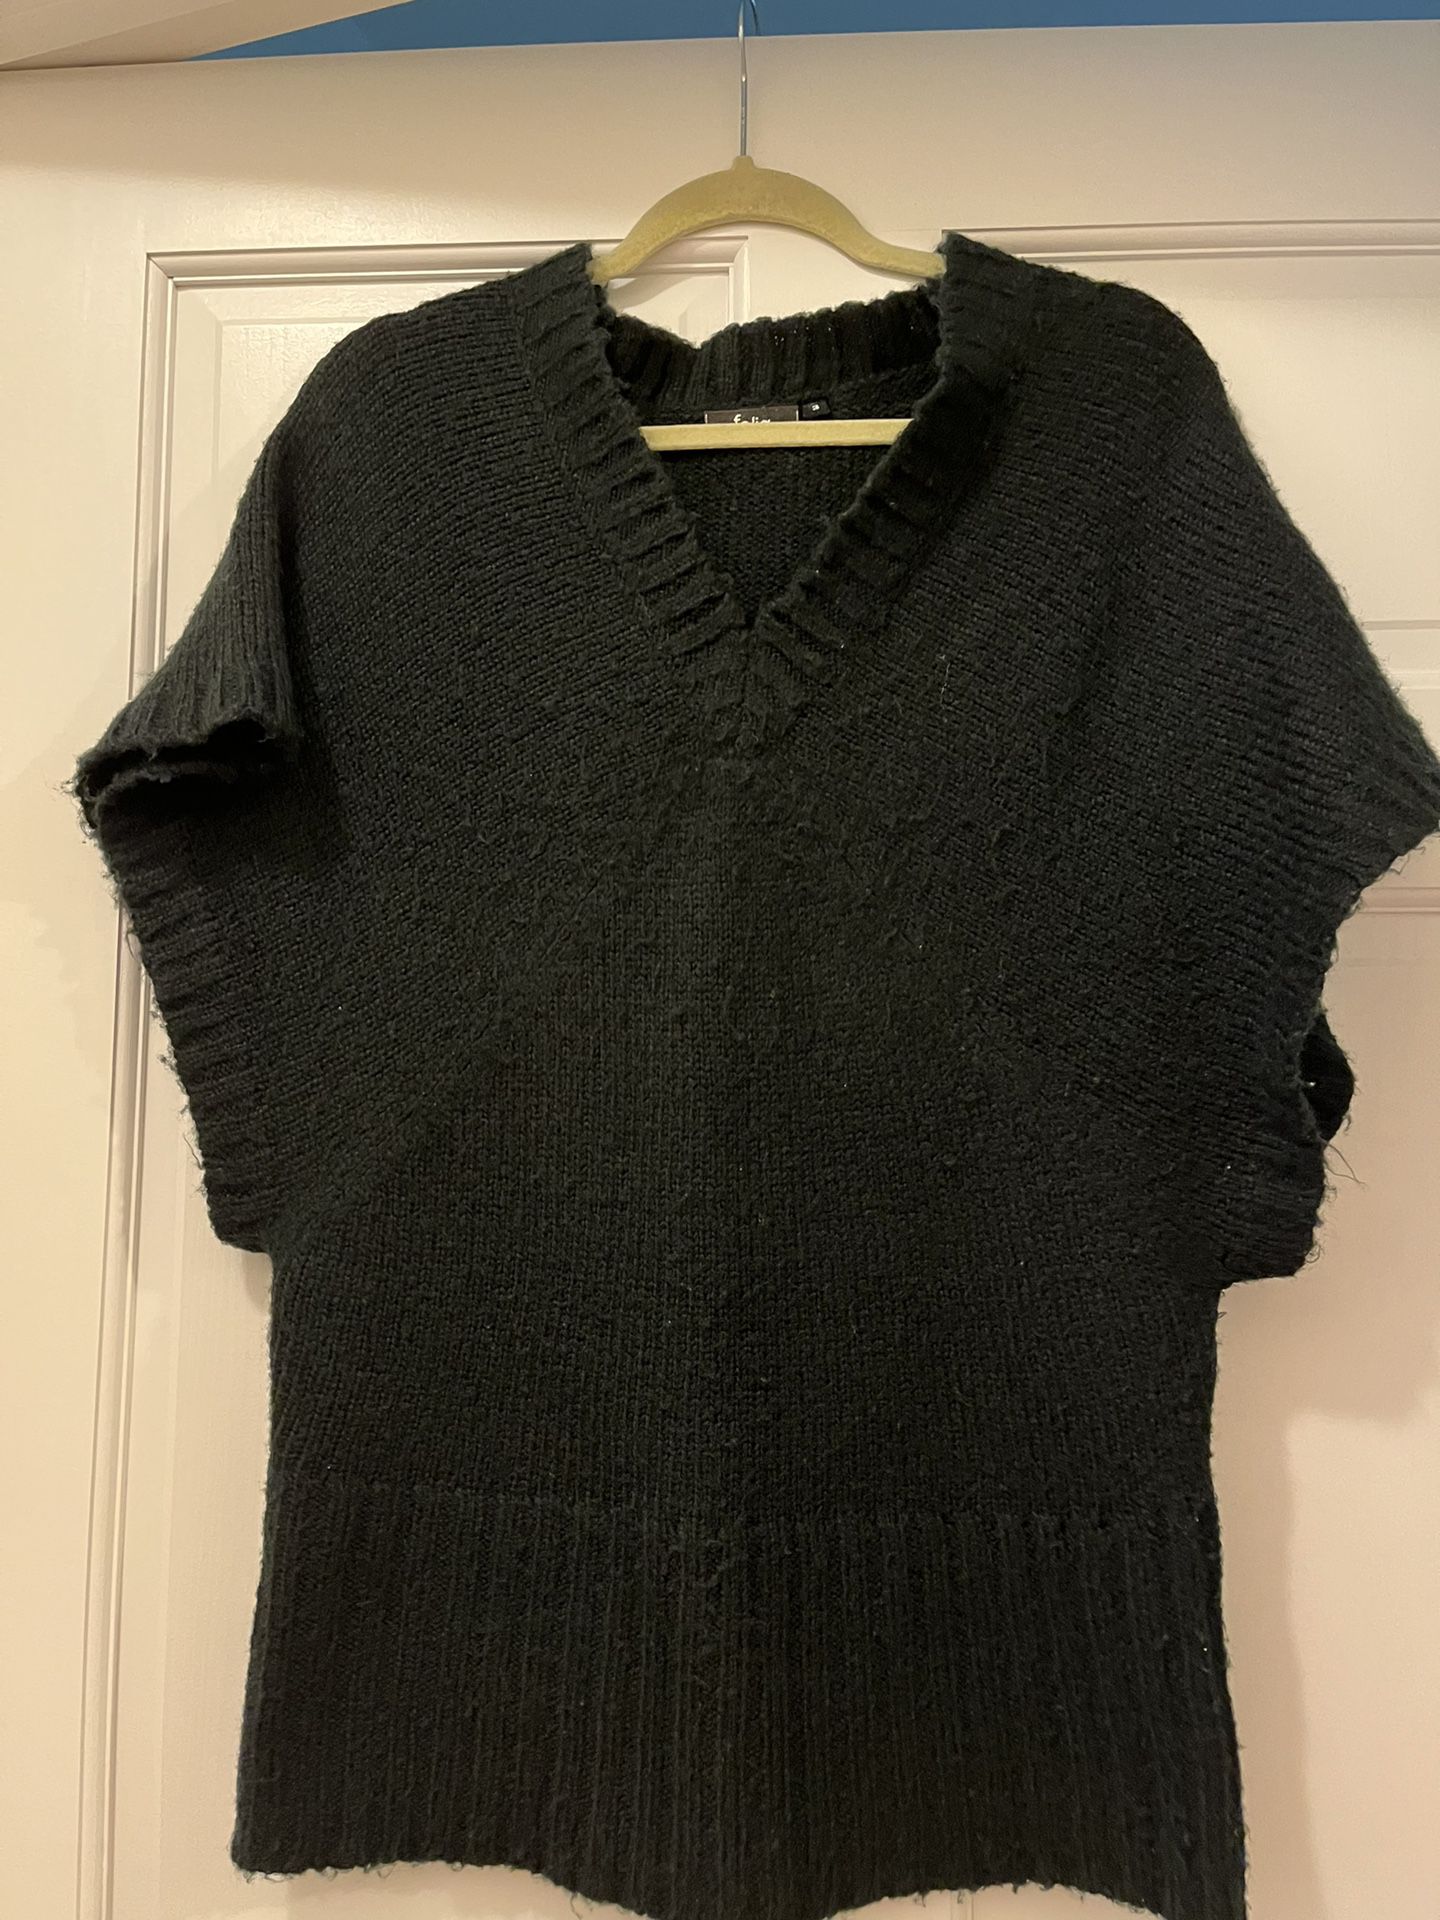 Black knit sweater, wide fit looks like size S/M 